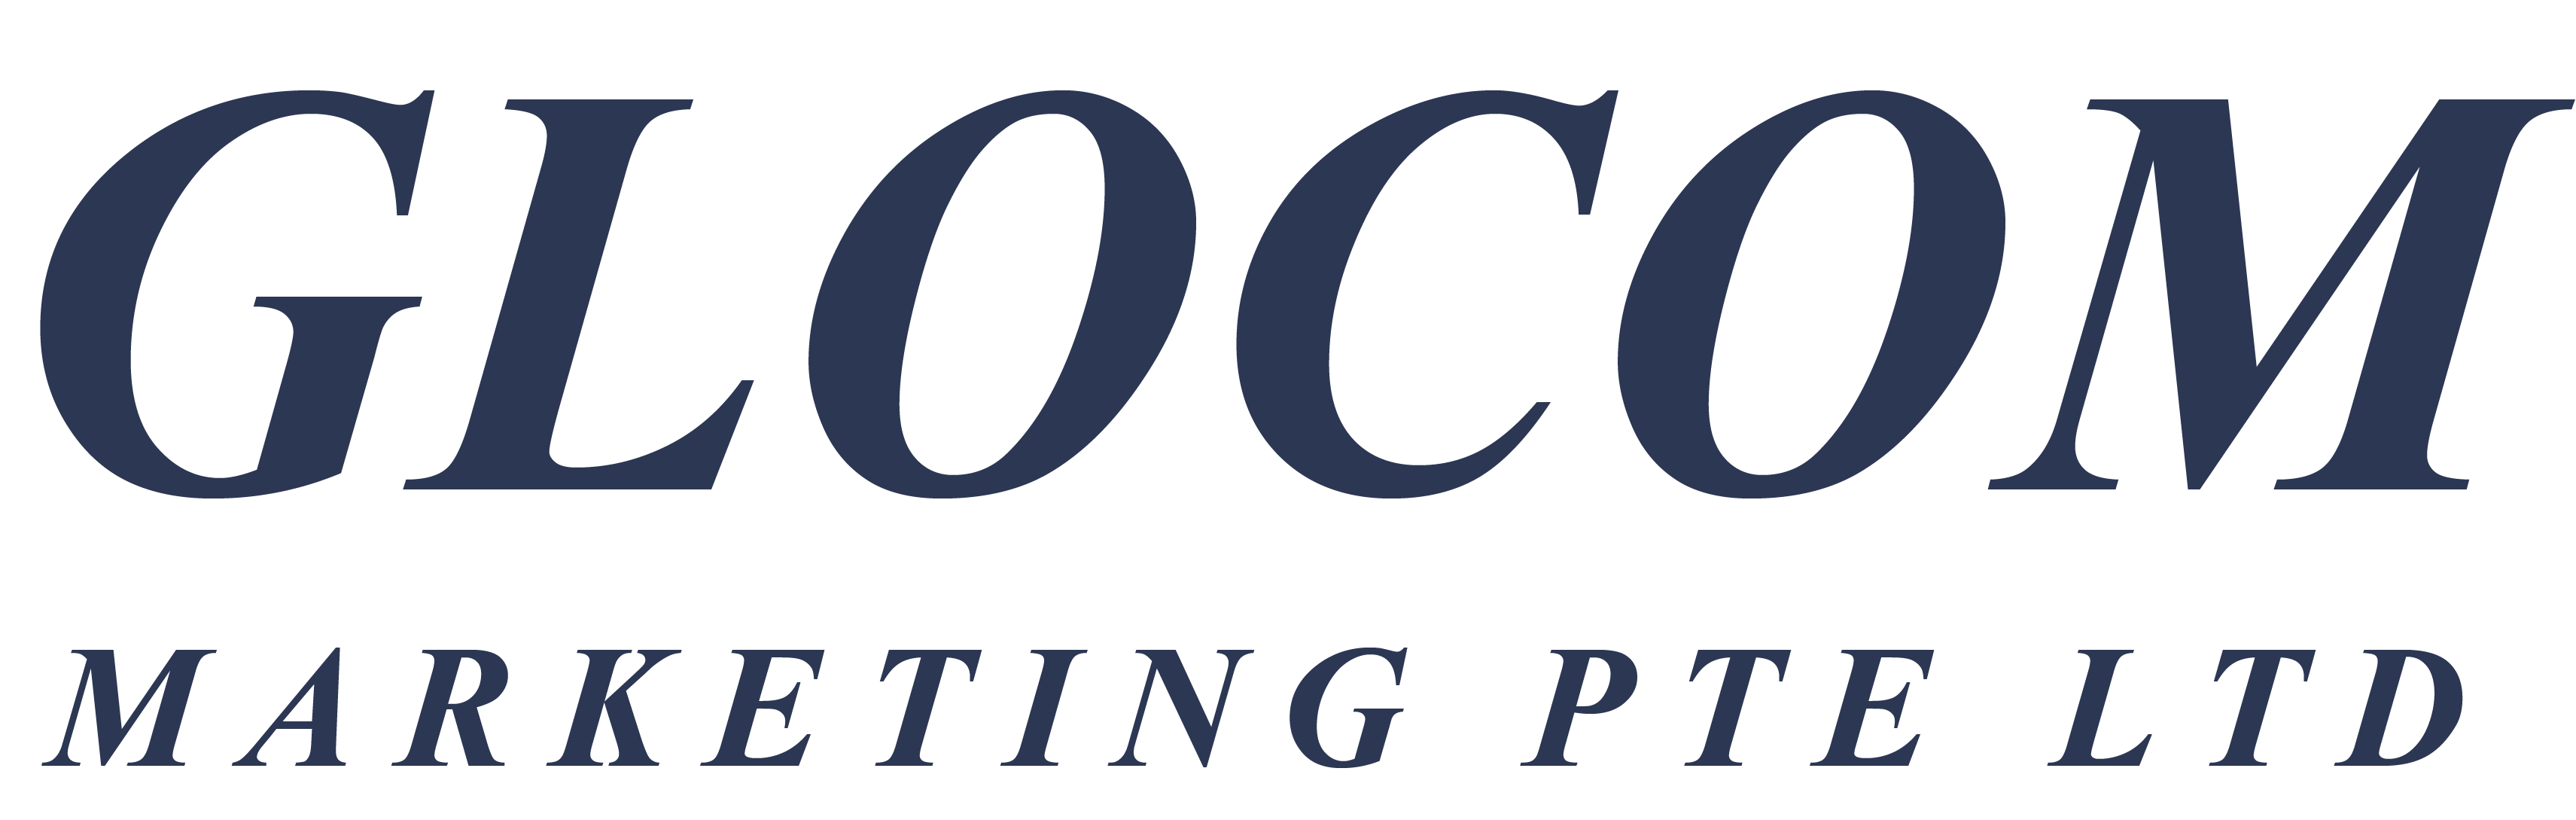 Glocom Marketing Pte Ltd company logo